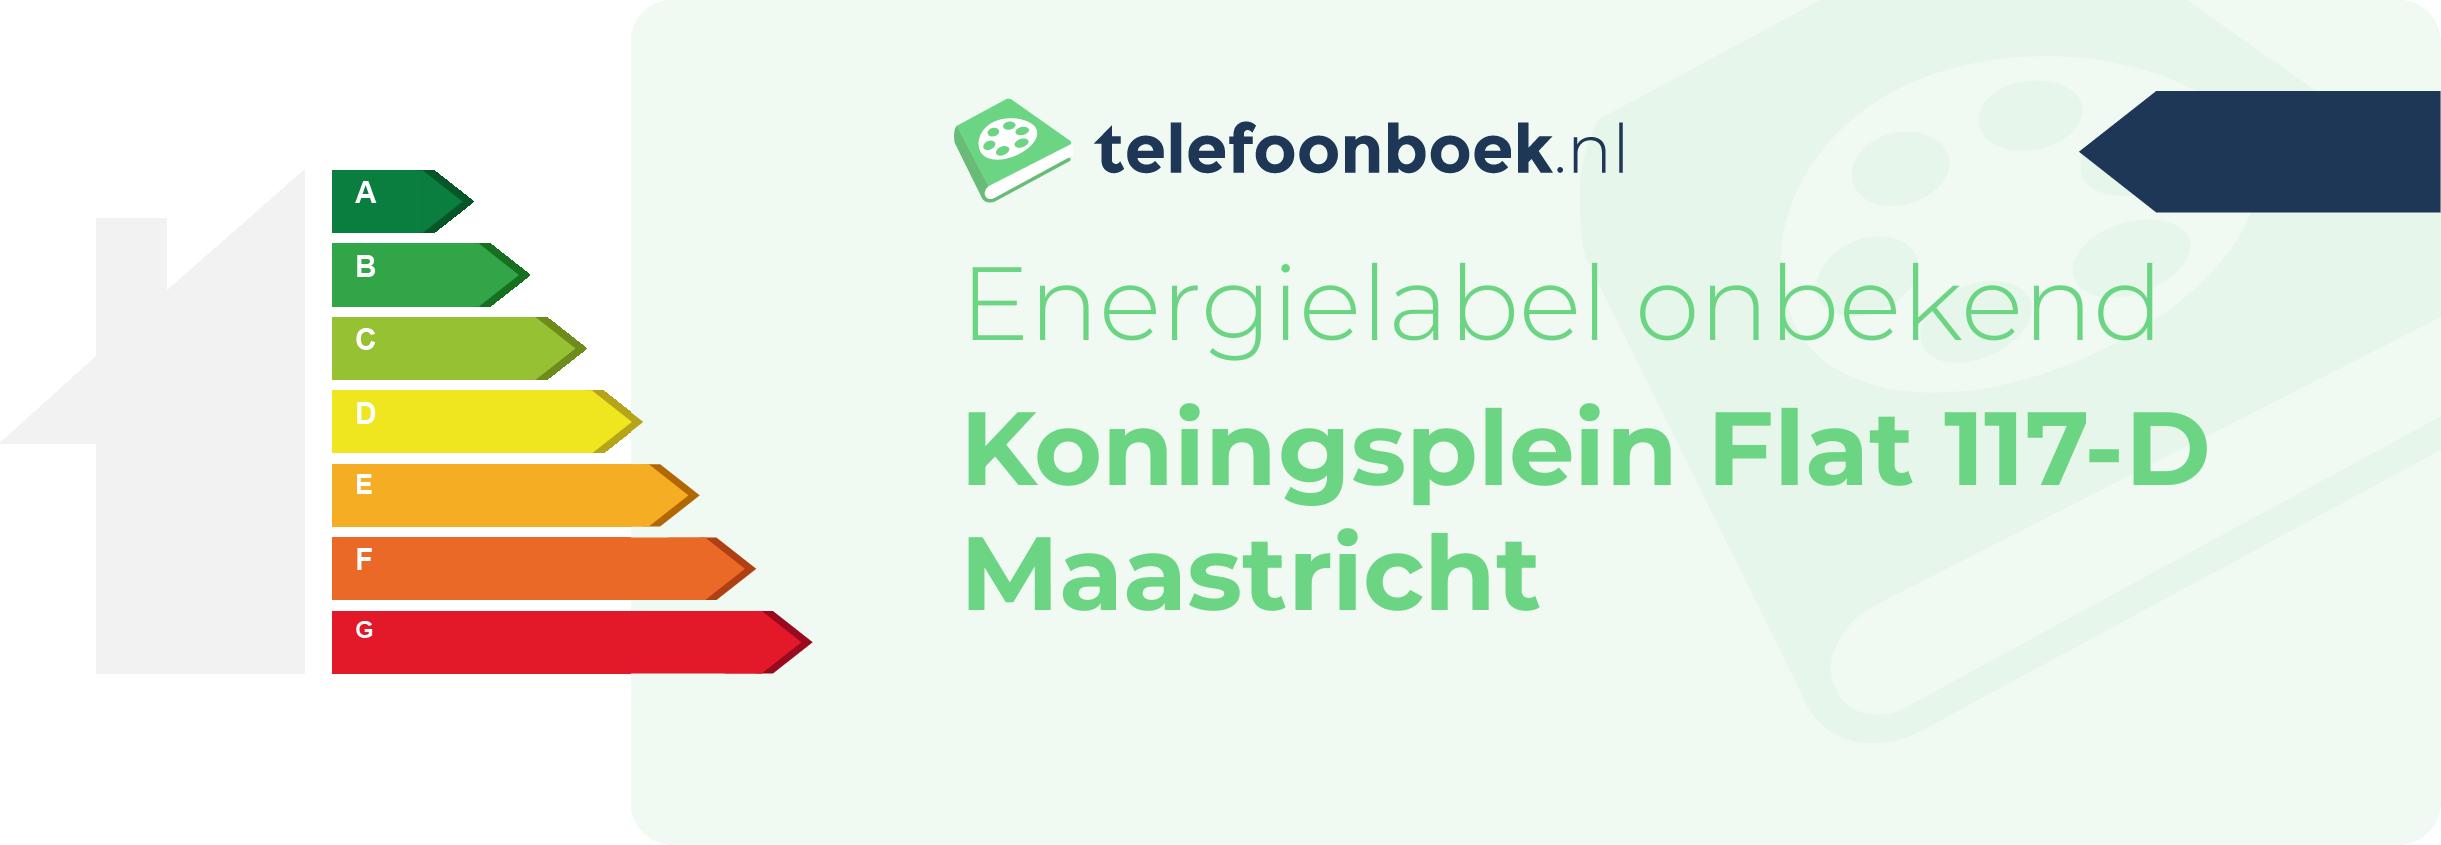 Energielabel Koningsplein Flat 117-D Maastricht